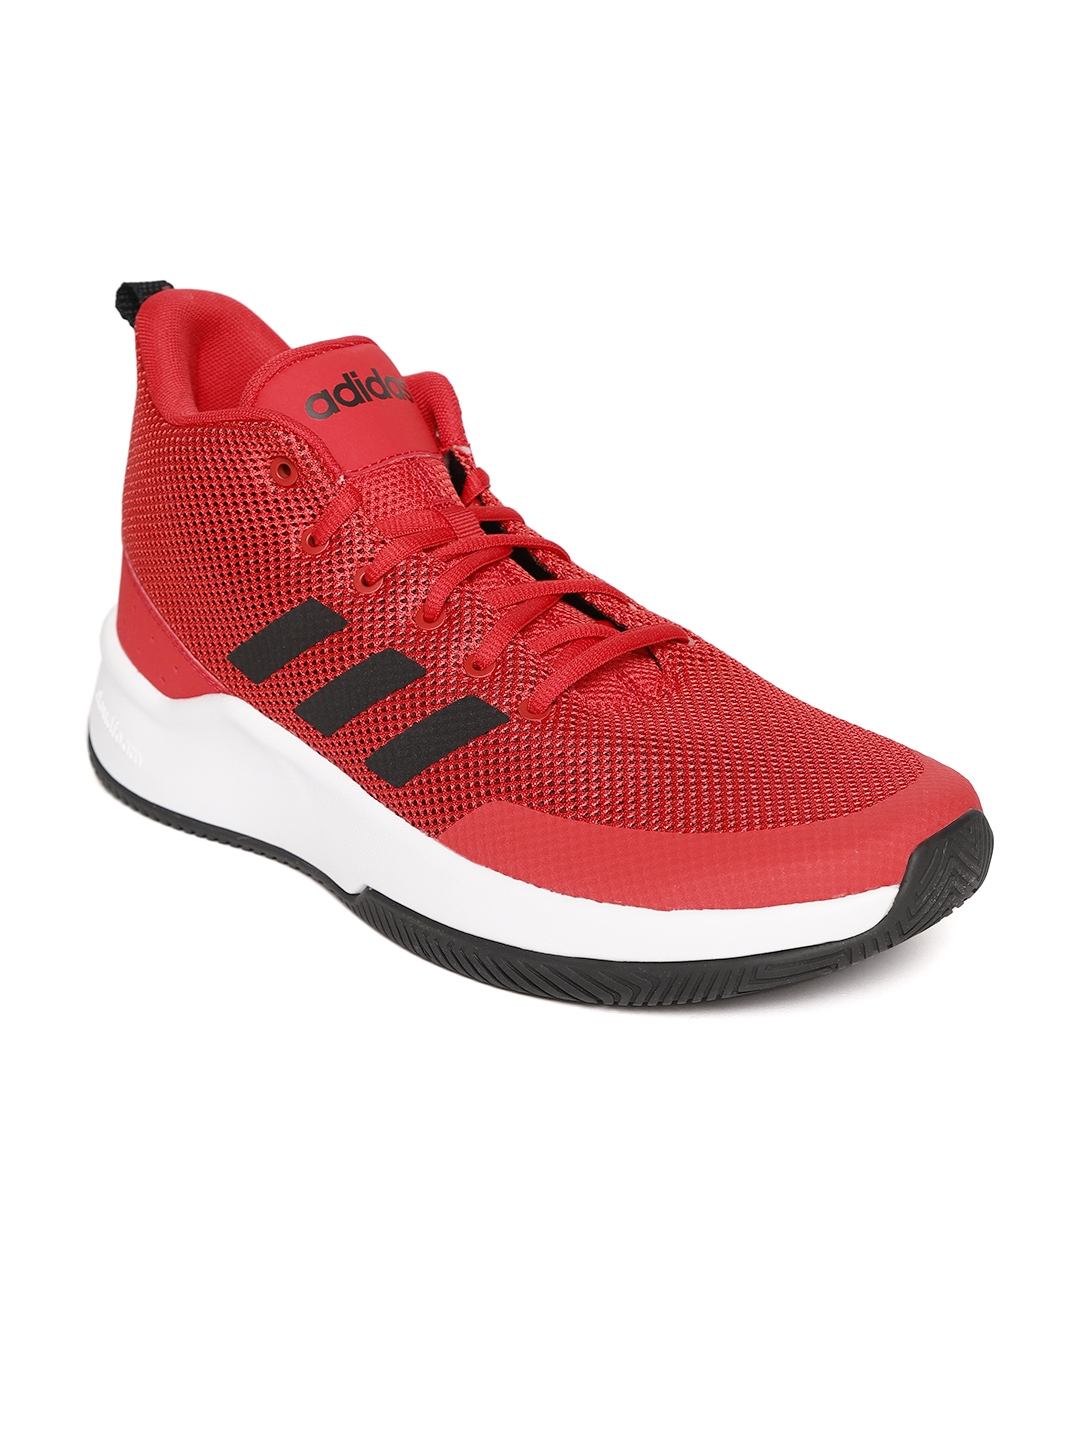 adidas red sneakers mens